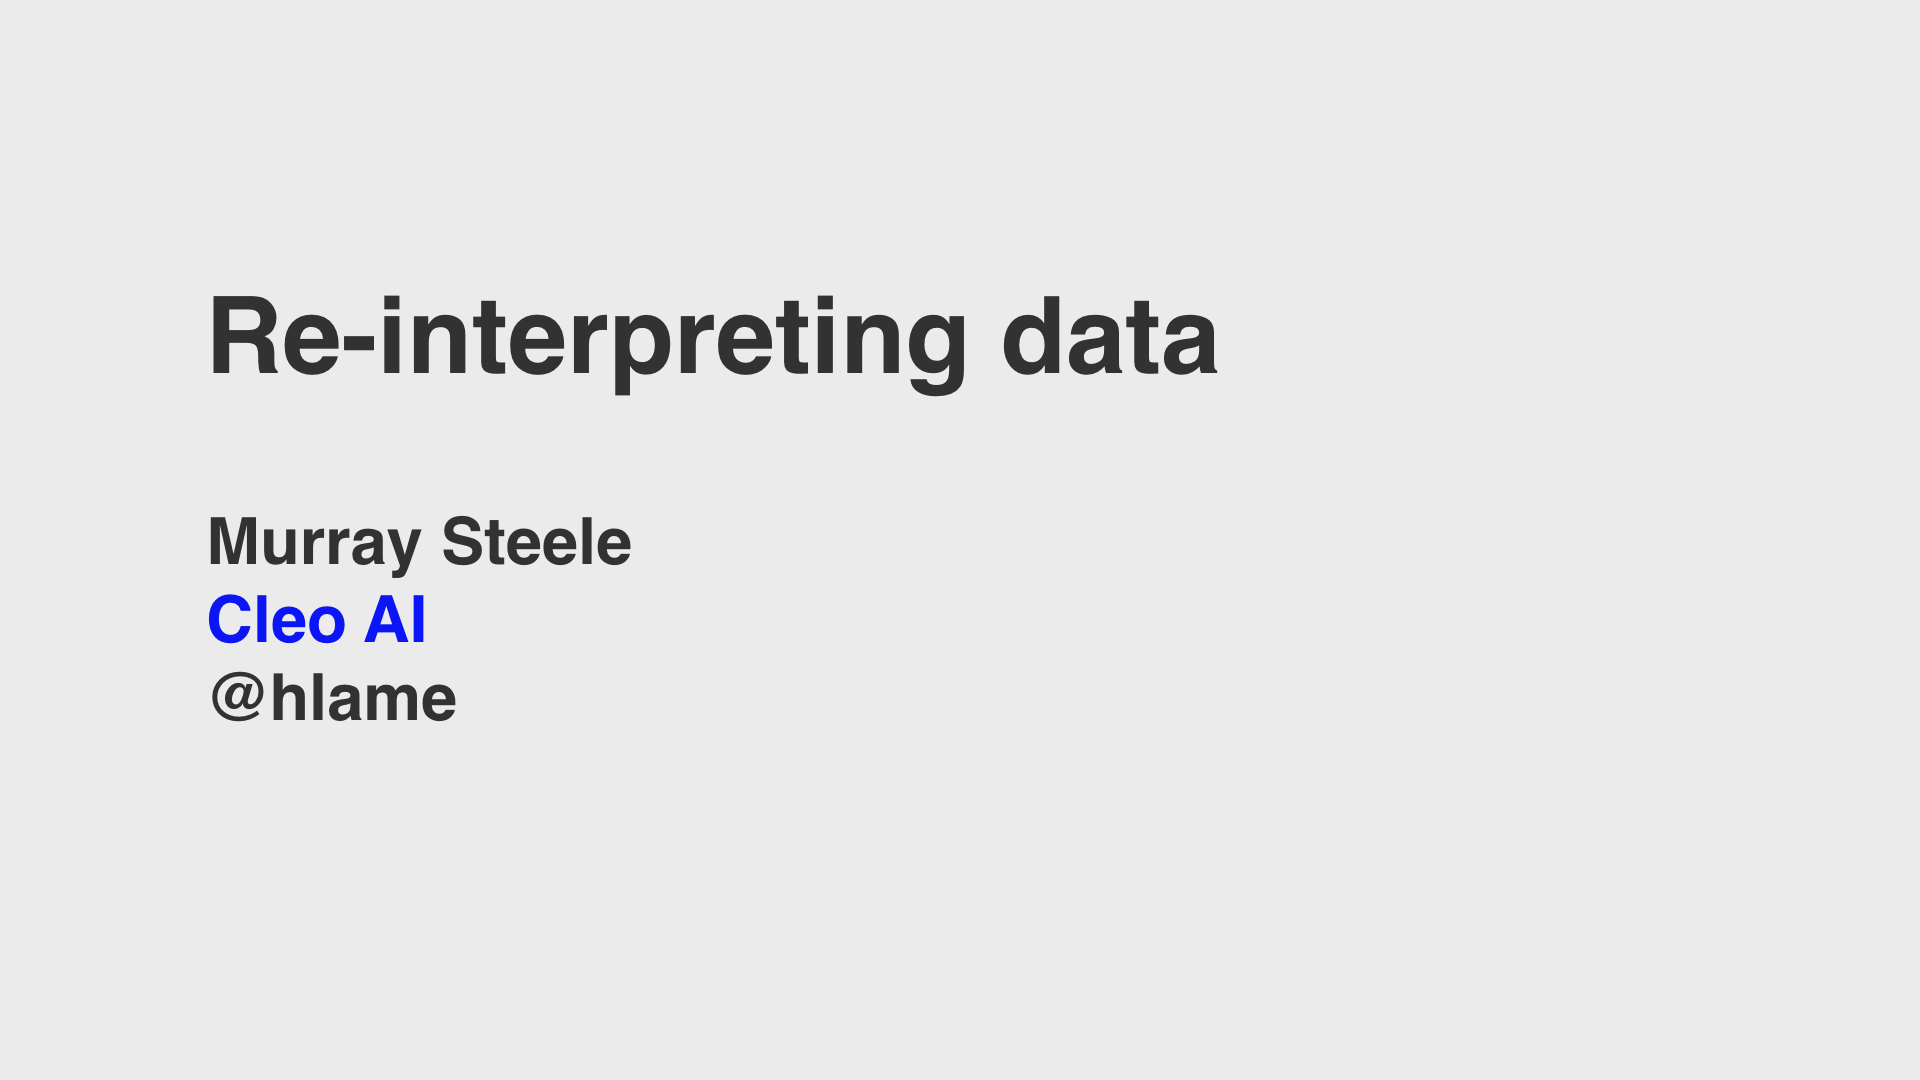 “Re-interpreting data”, text: Re-interpreting data, Murray Steele, Cleo AI, @hlame